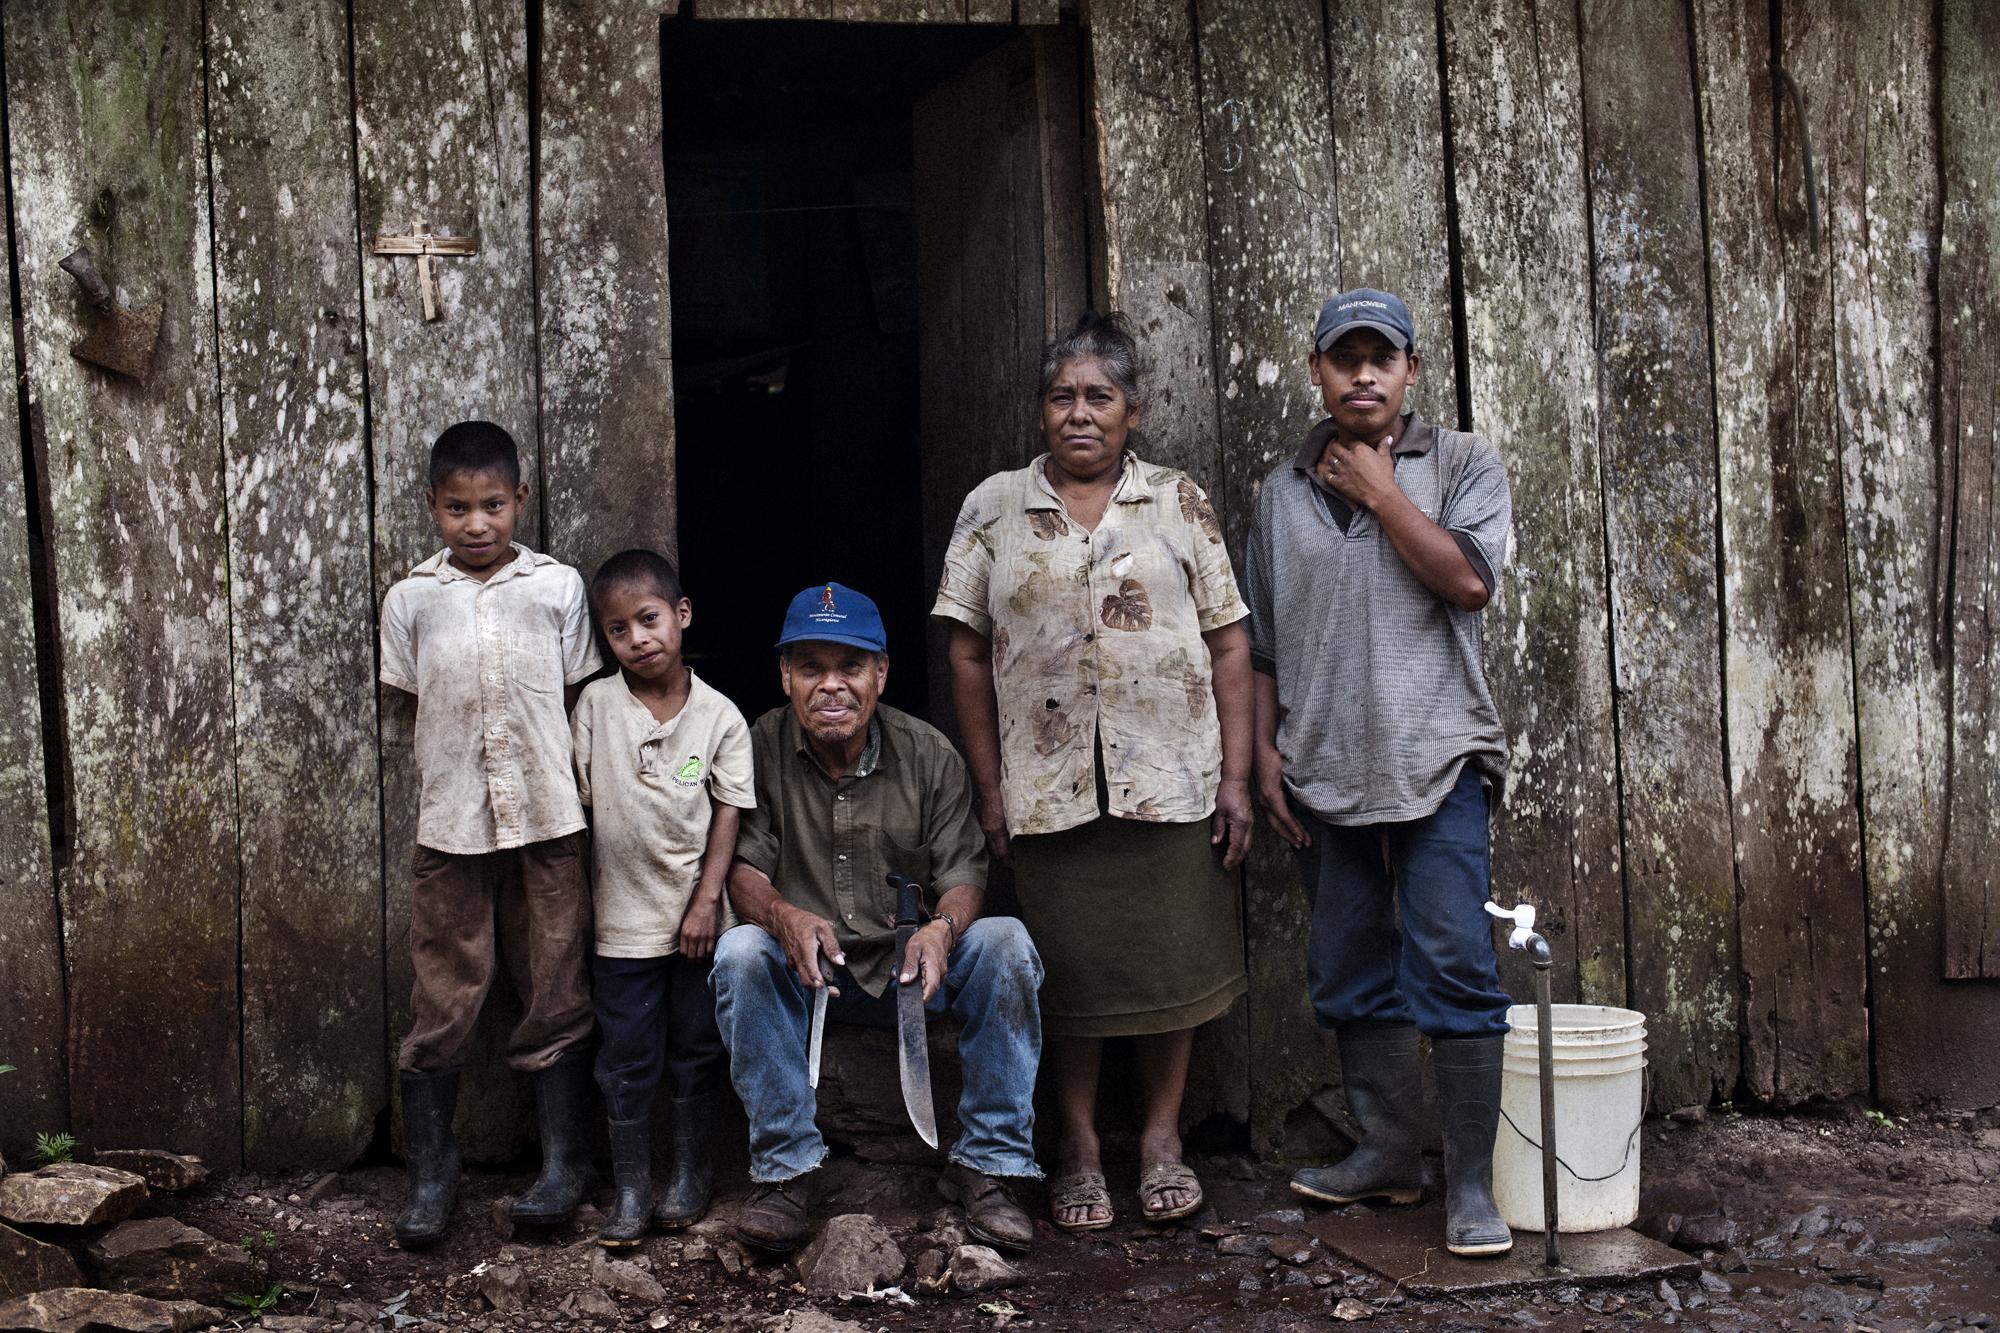 Microcredit / Central America - Jinotega, Nicaragua.
October 2010.
Octaviano Hernandez,...